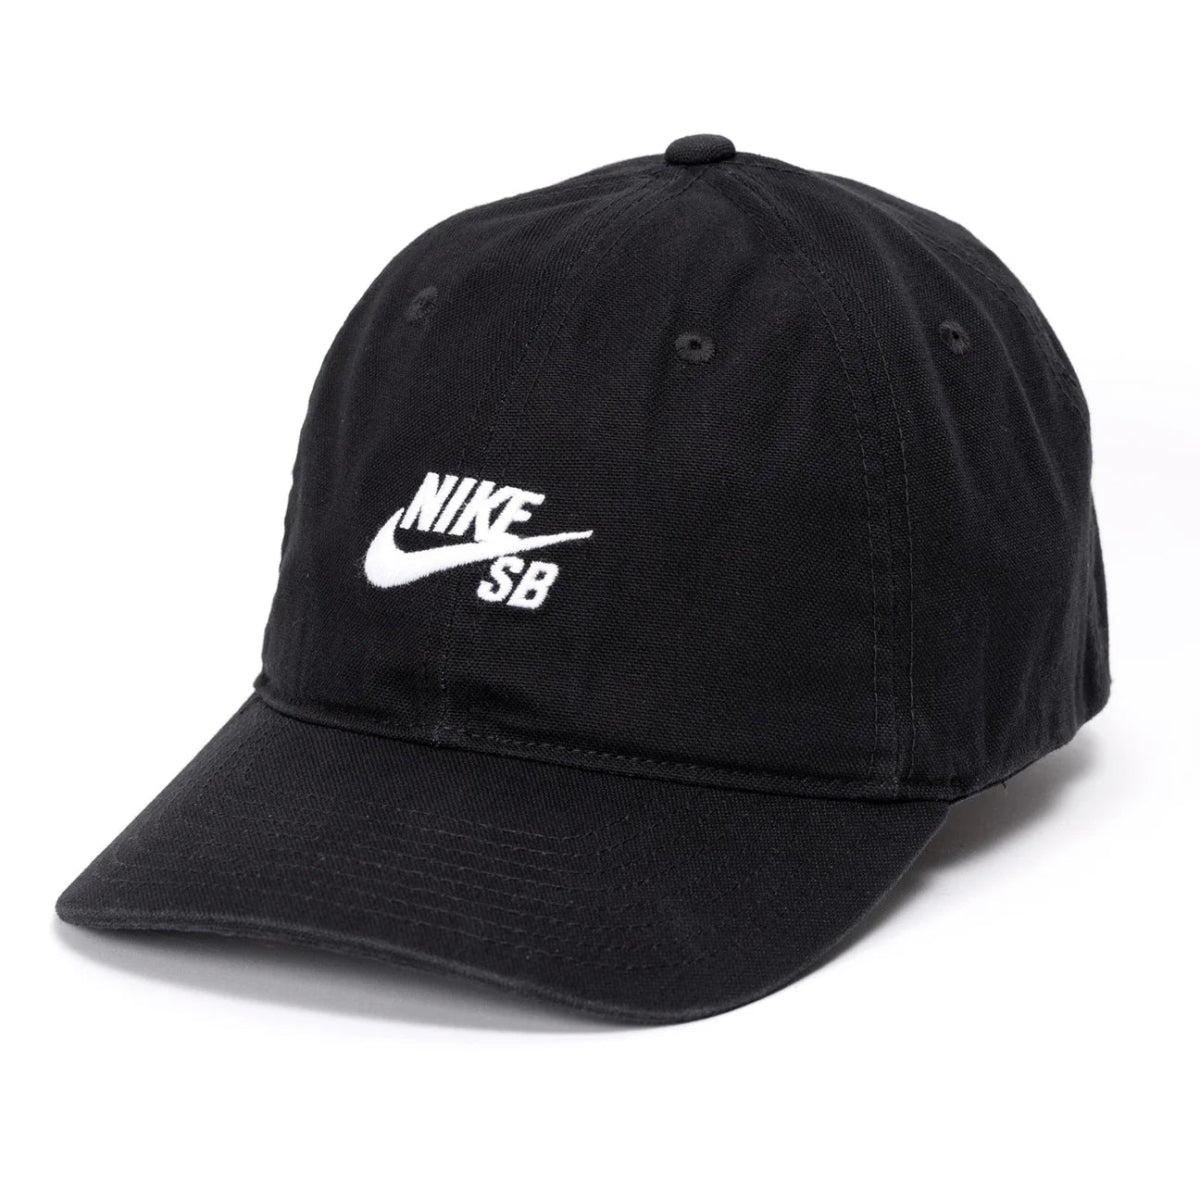 Nike SB Club Hat in Black/White - Goodnews Skateshop